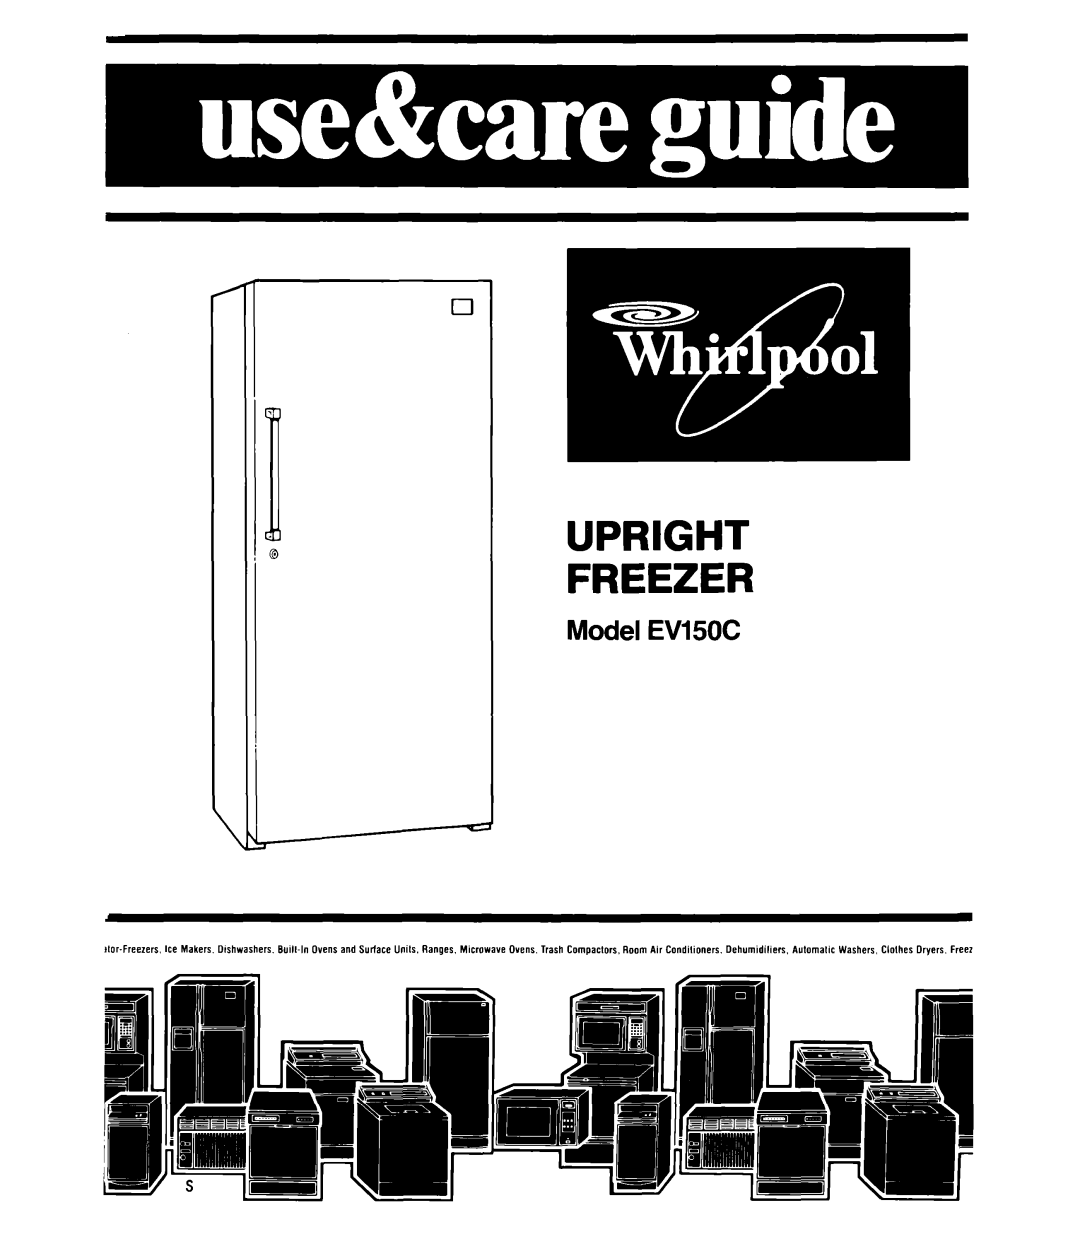 Whirlpool manual Upright Freezer, Model EV150C 